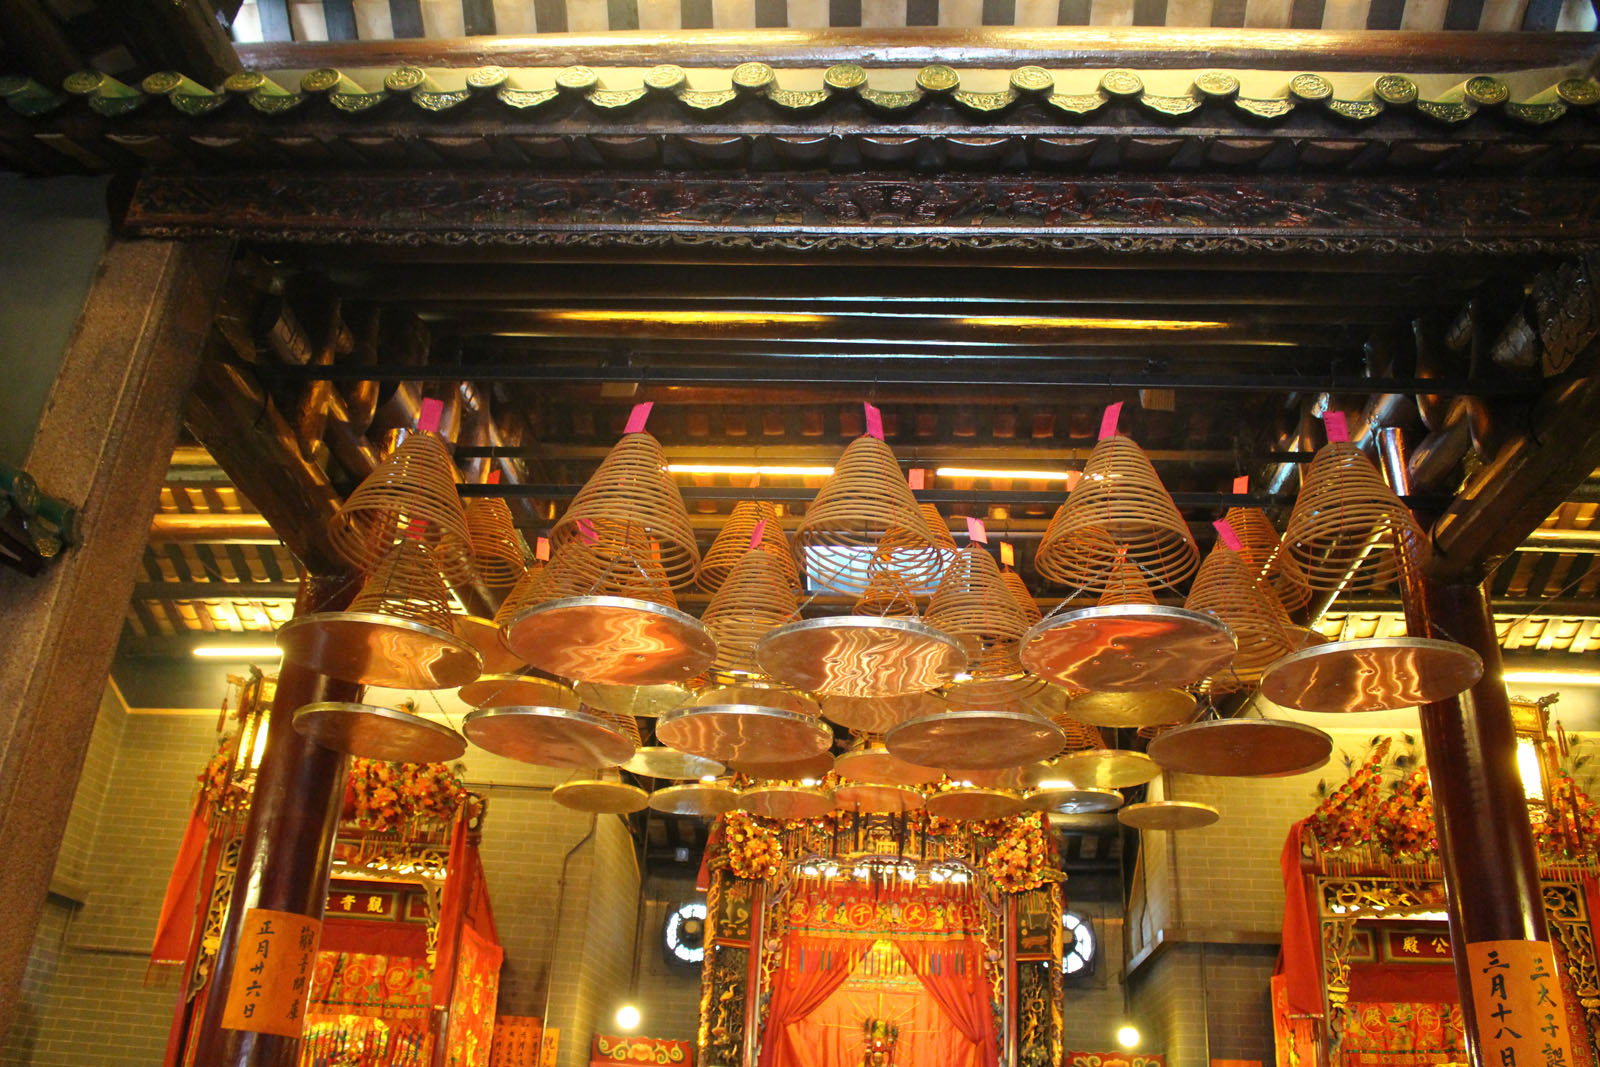 Photo 8: Sam Tai Tze Temple (Sham Shui Po)